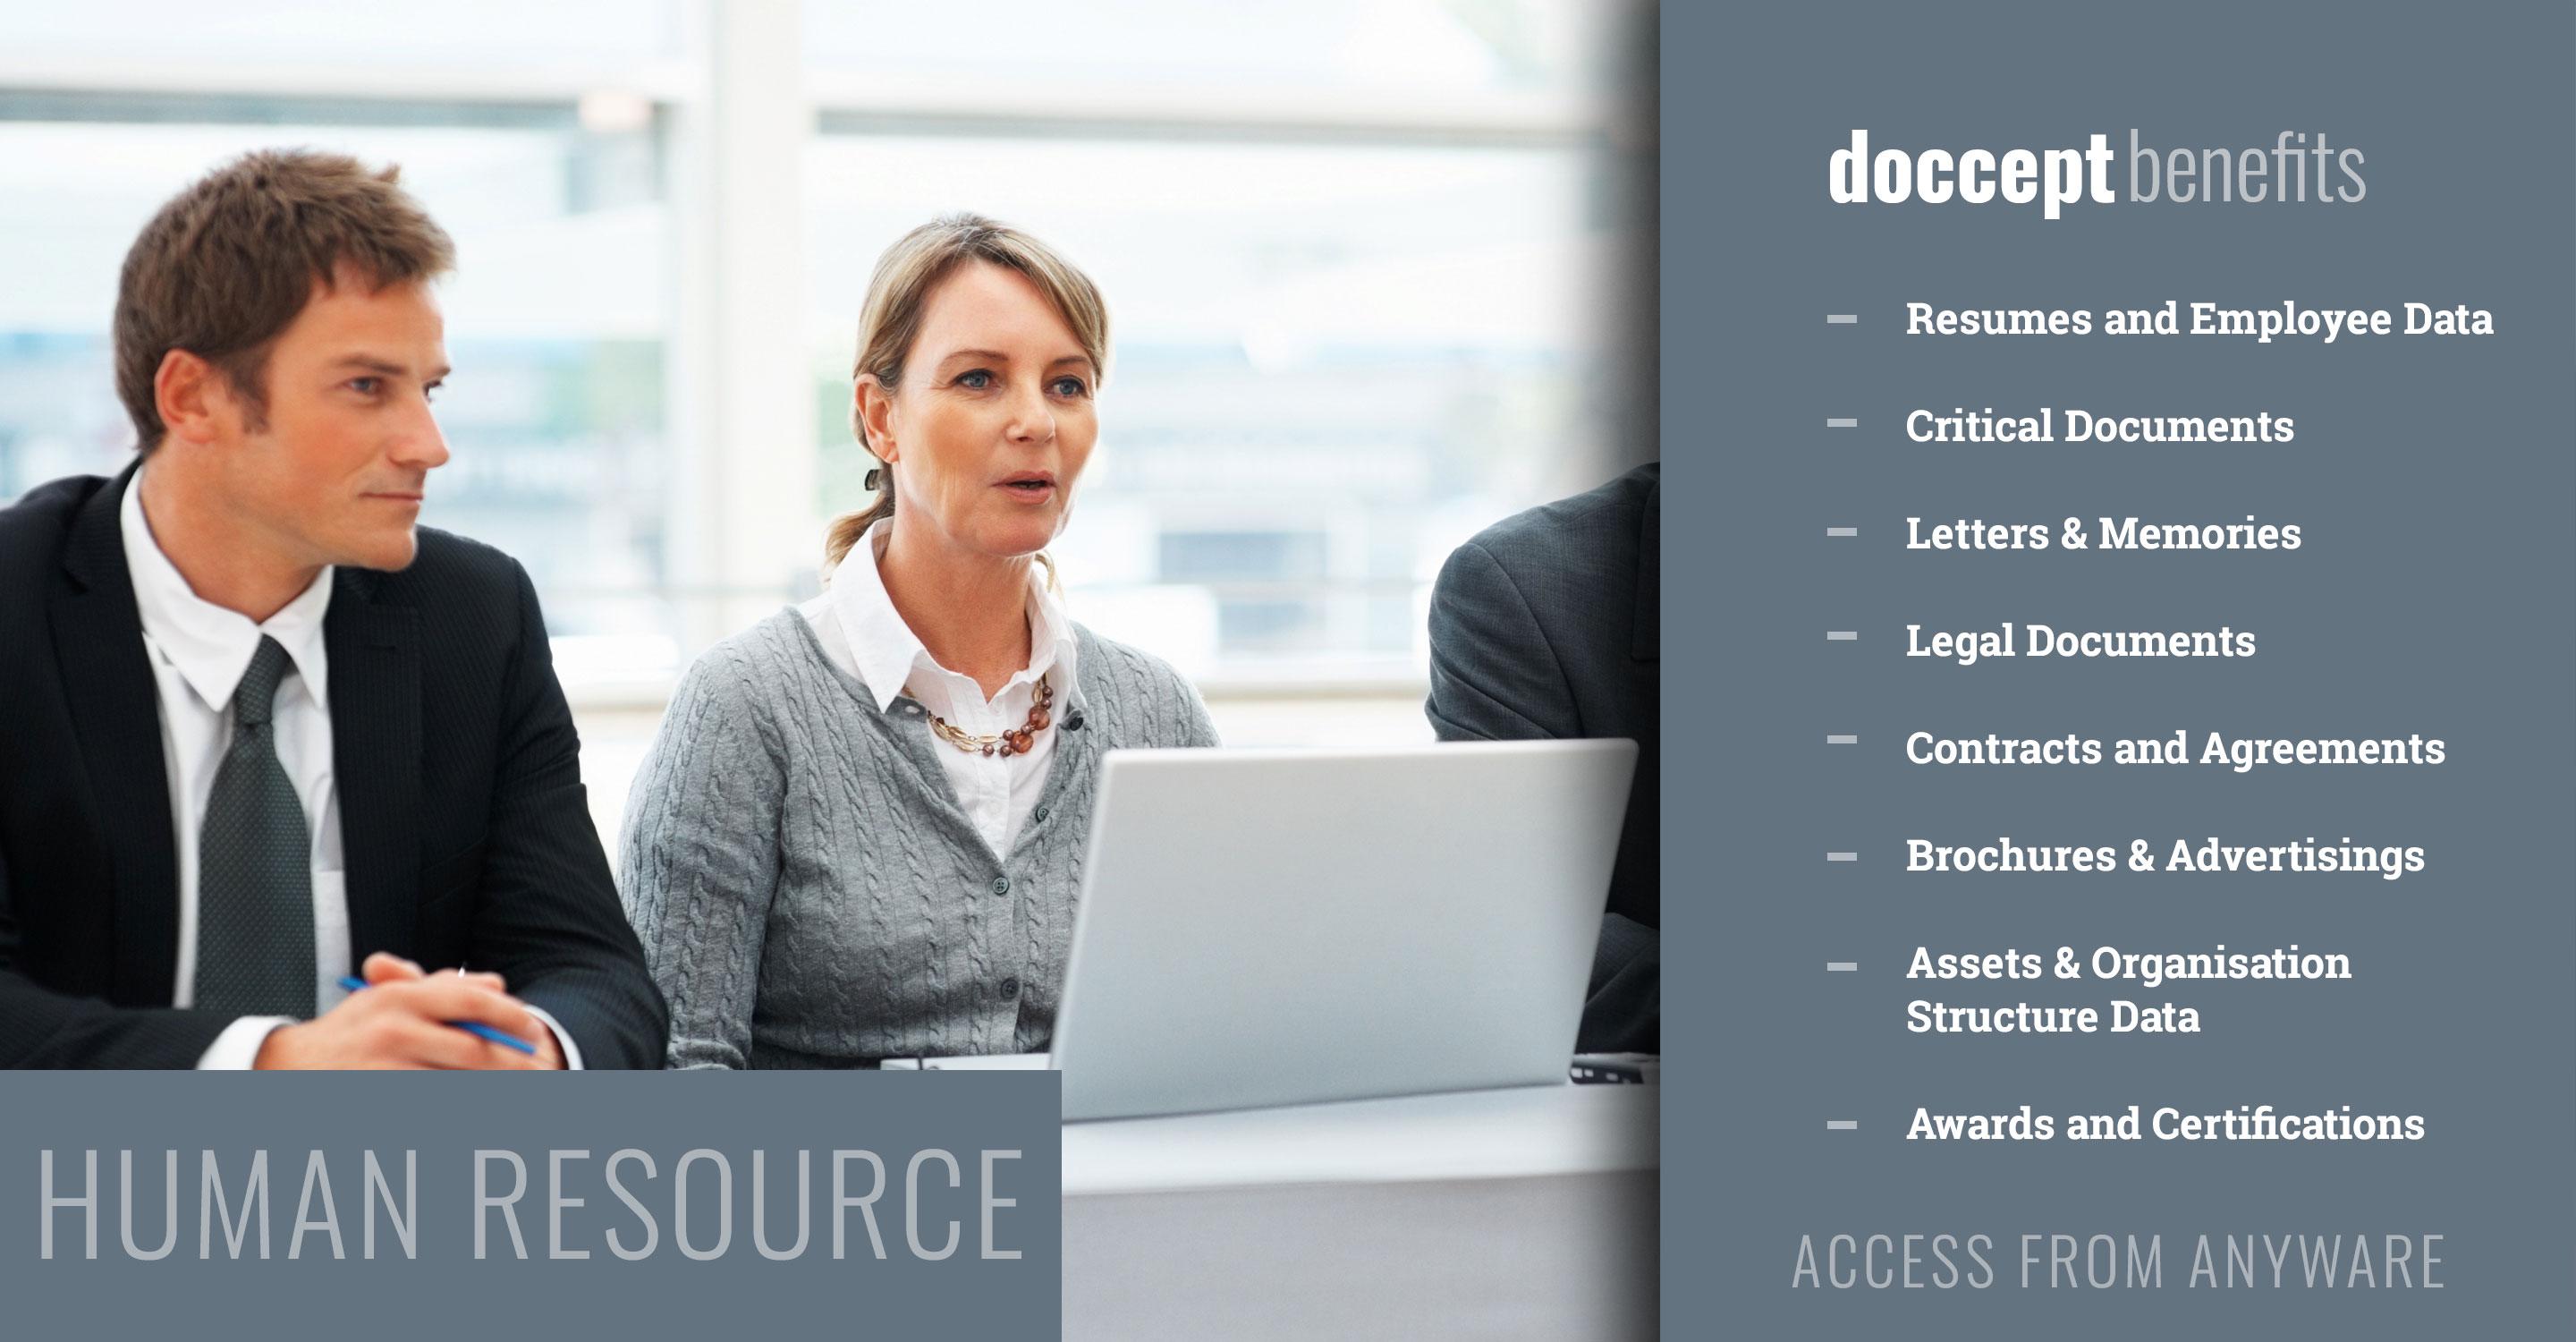 Human Resource Document Management